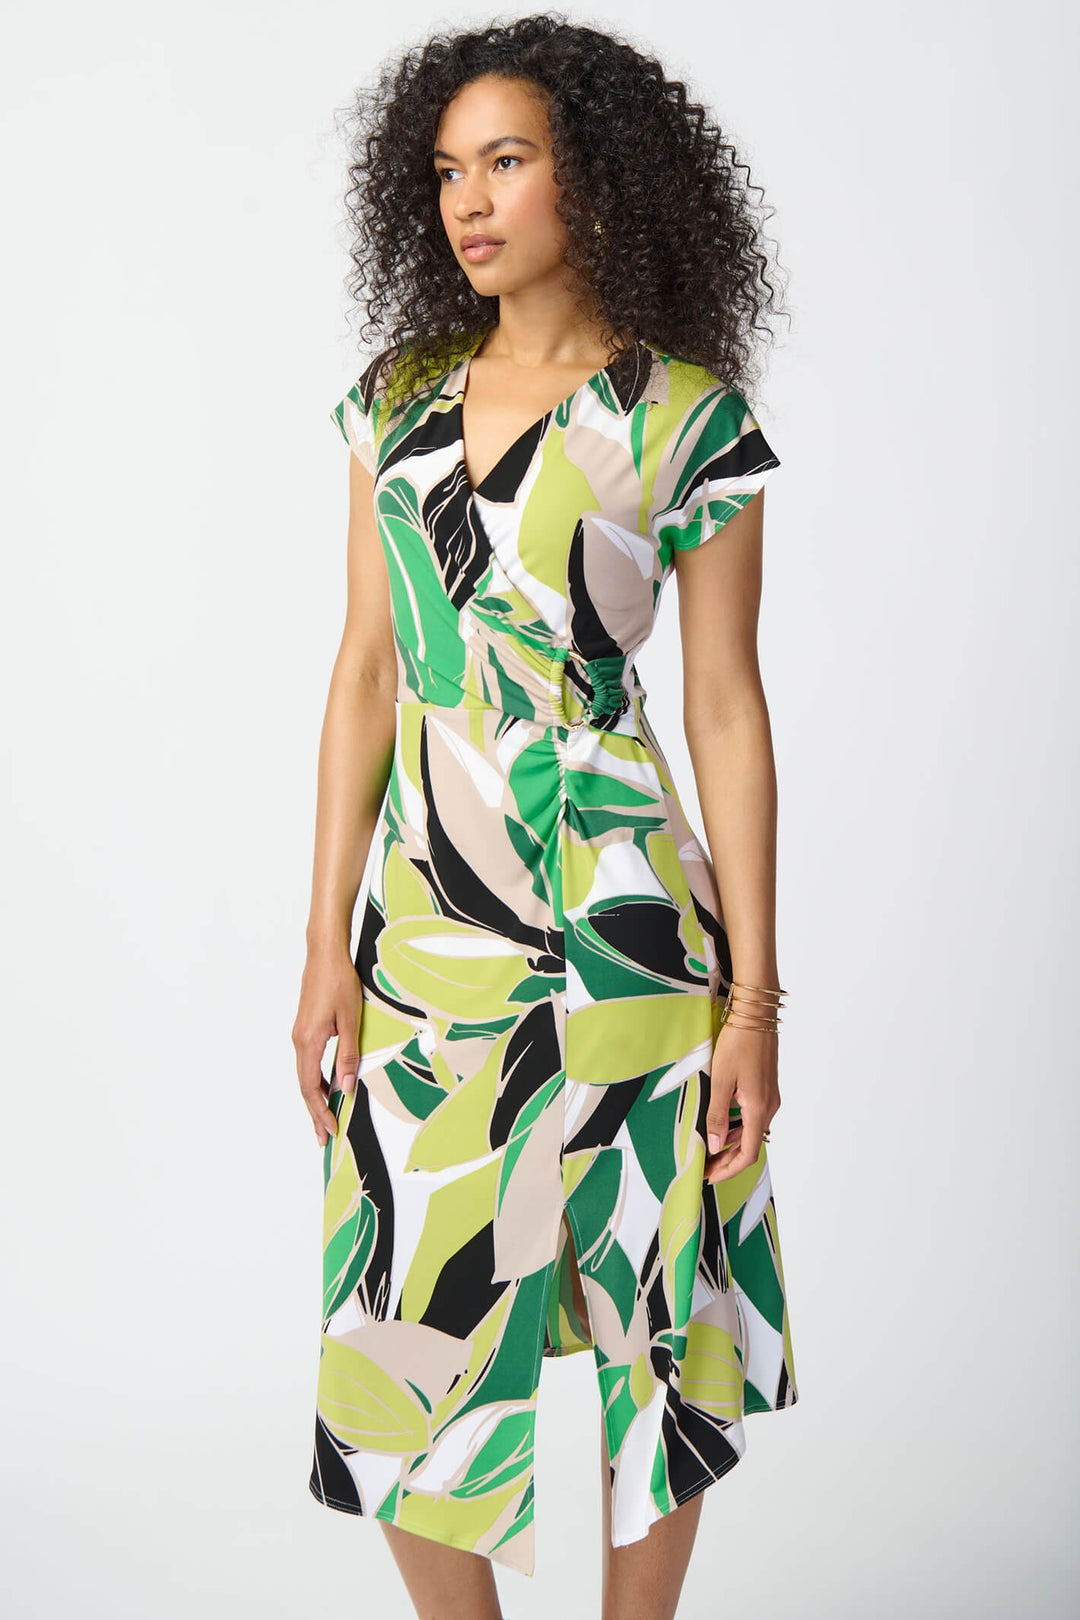 Joseph Ribkoff 241201 Green Tropical Print Silky Knit Dress - Dotique Chesterfield